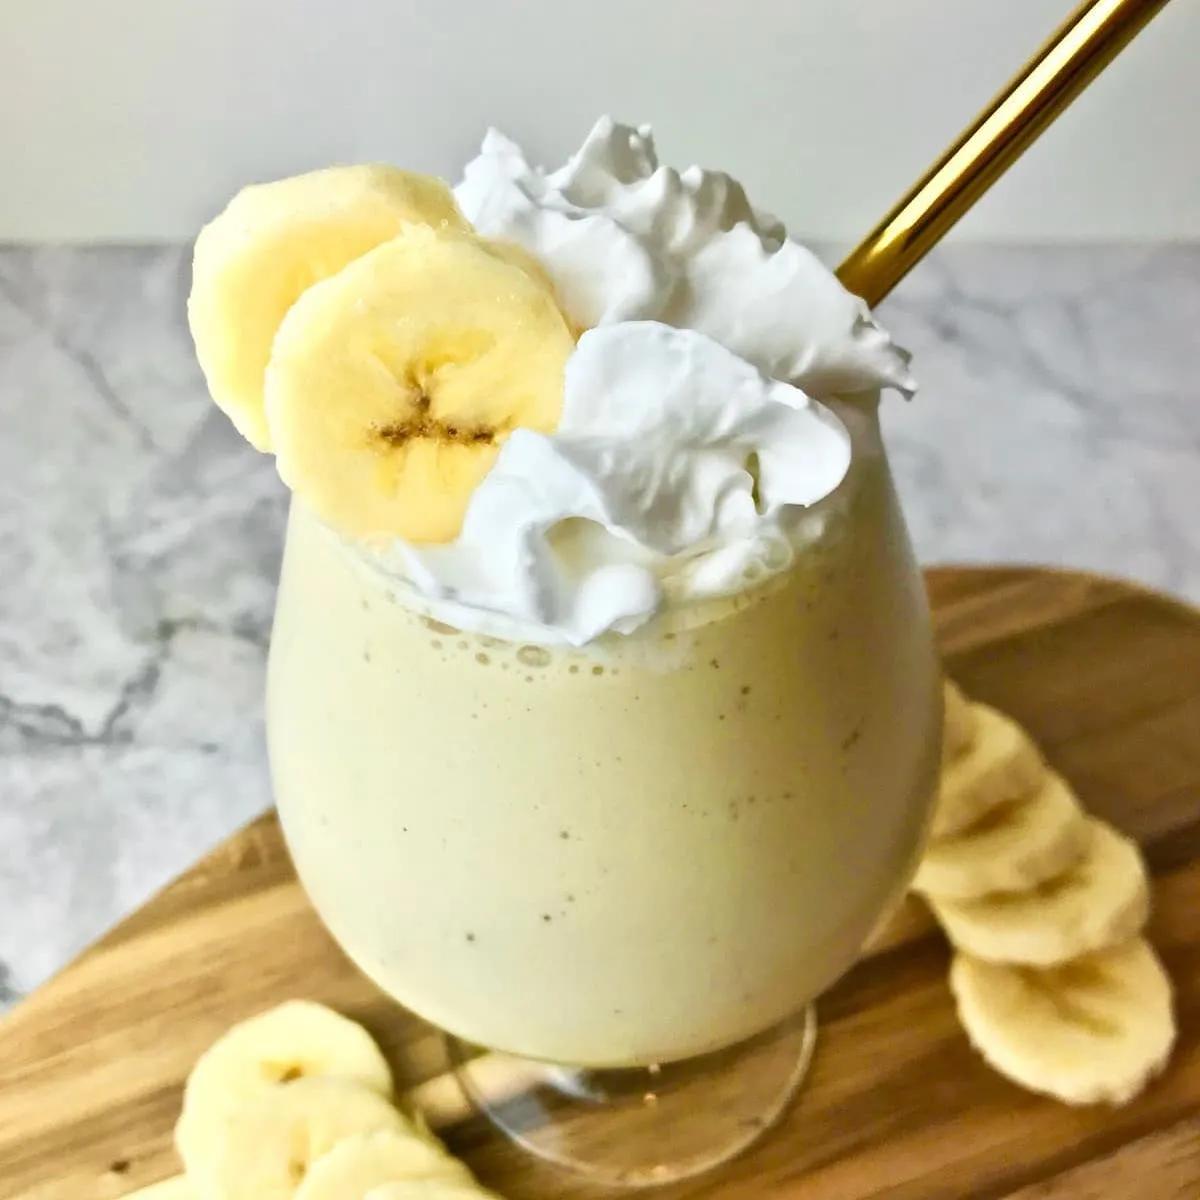 Easy Banana Milkshake - Your Smoothie Guide